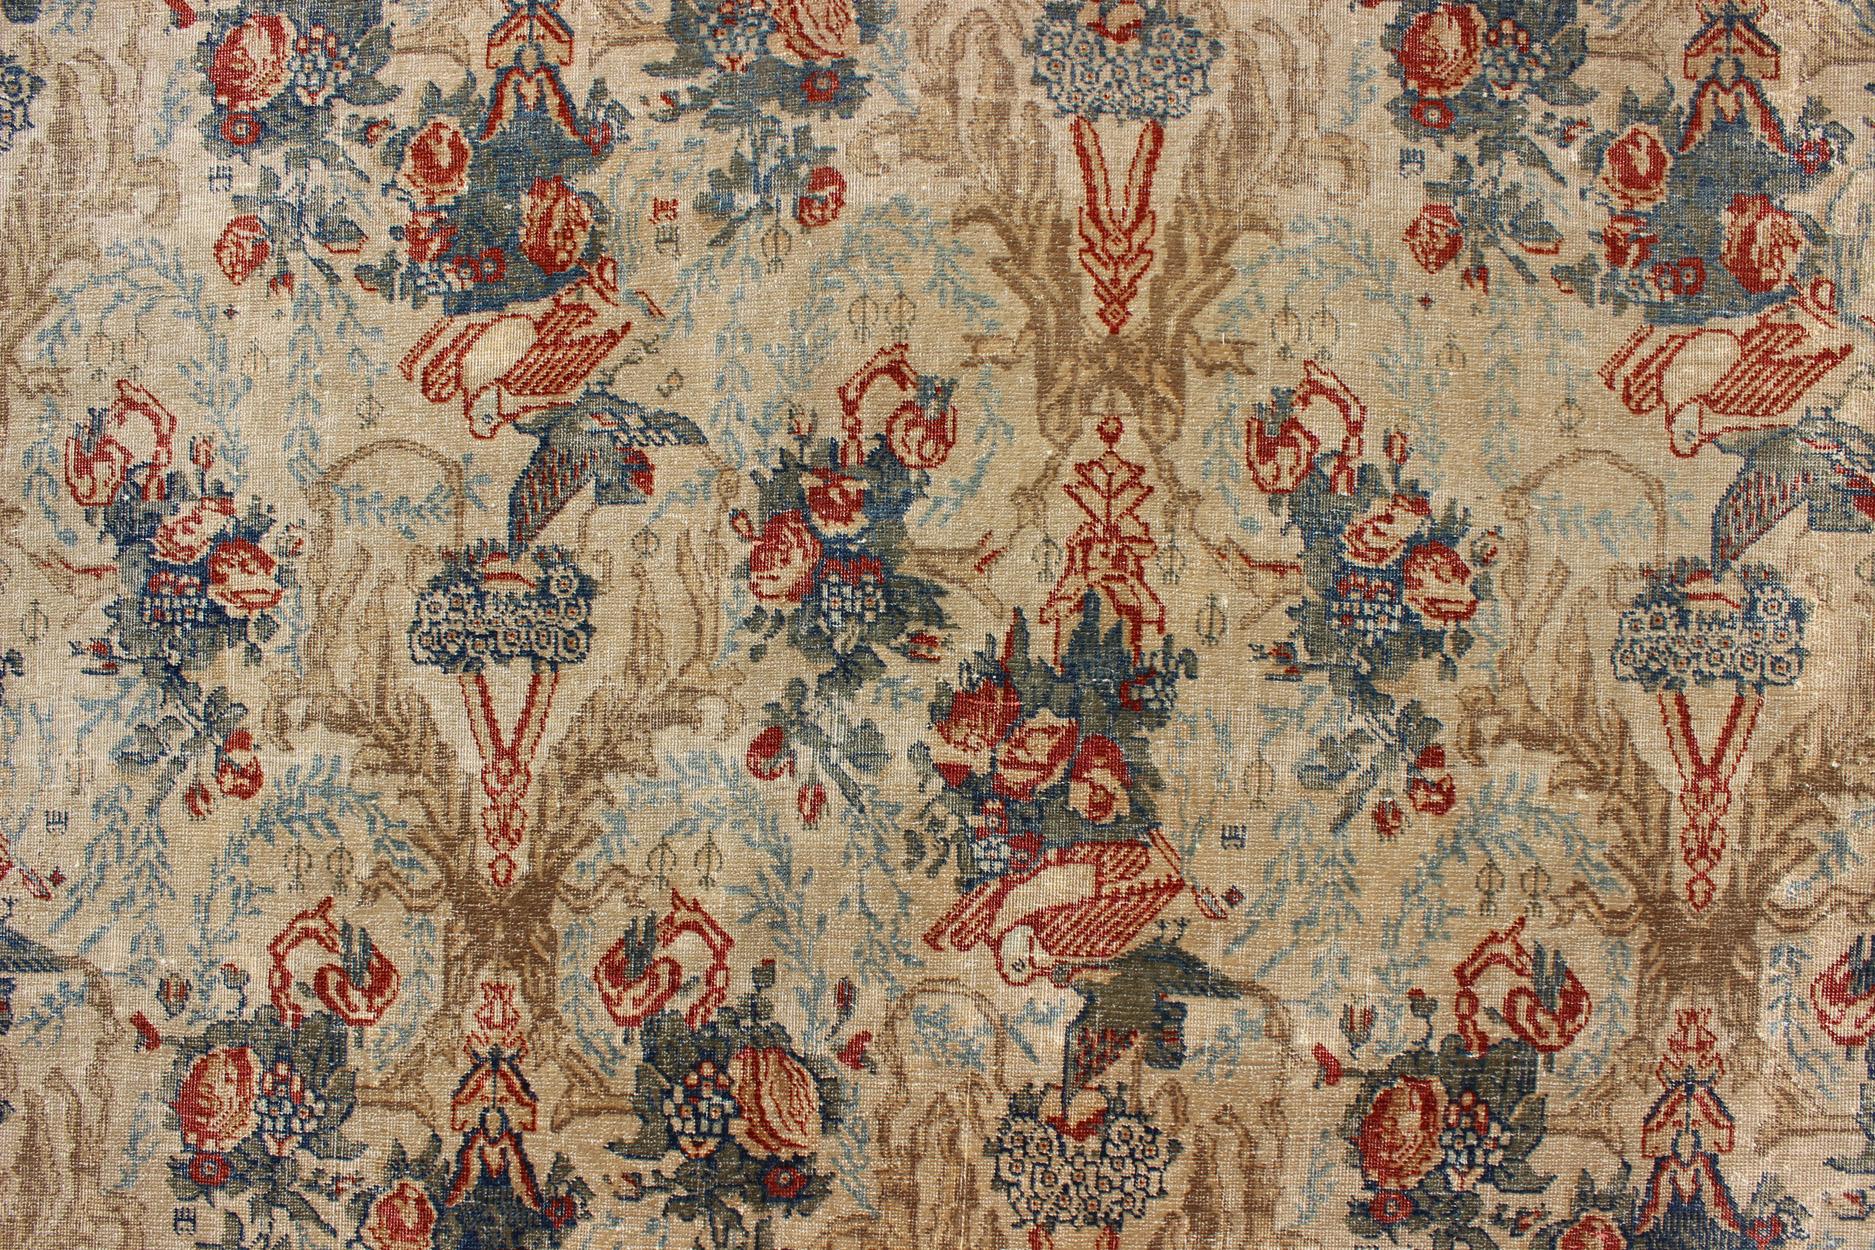 Antique Fine Tabriz Persian Carpet in Ivory Background in Florals & Bird Design For Sale 3